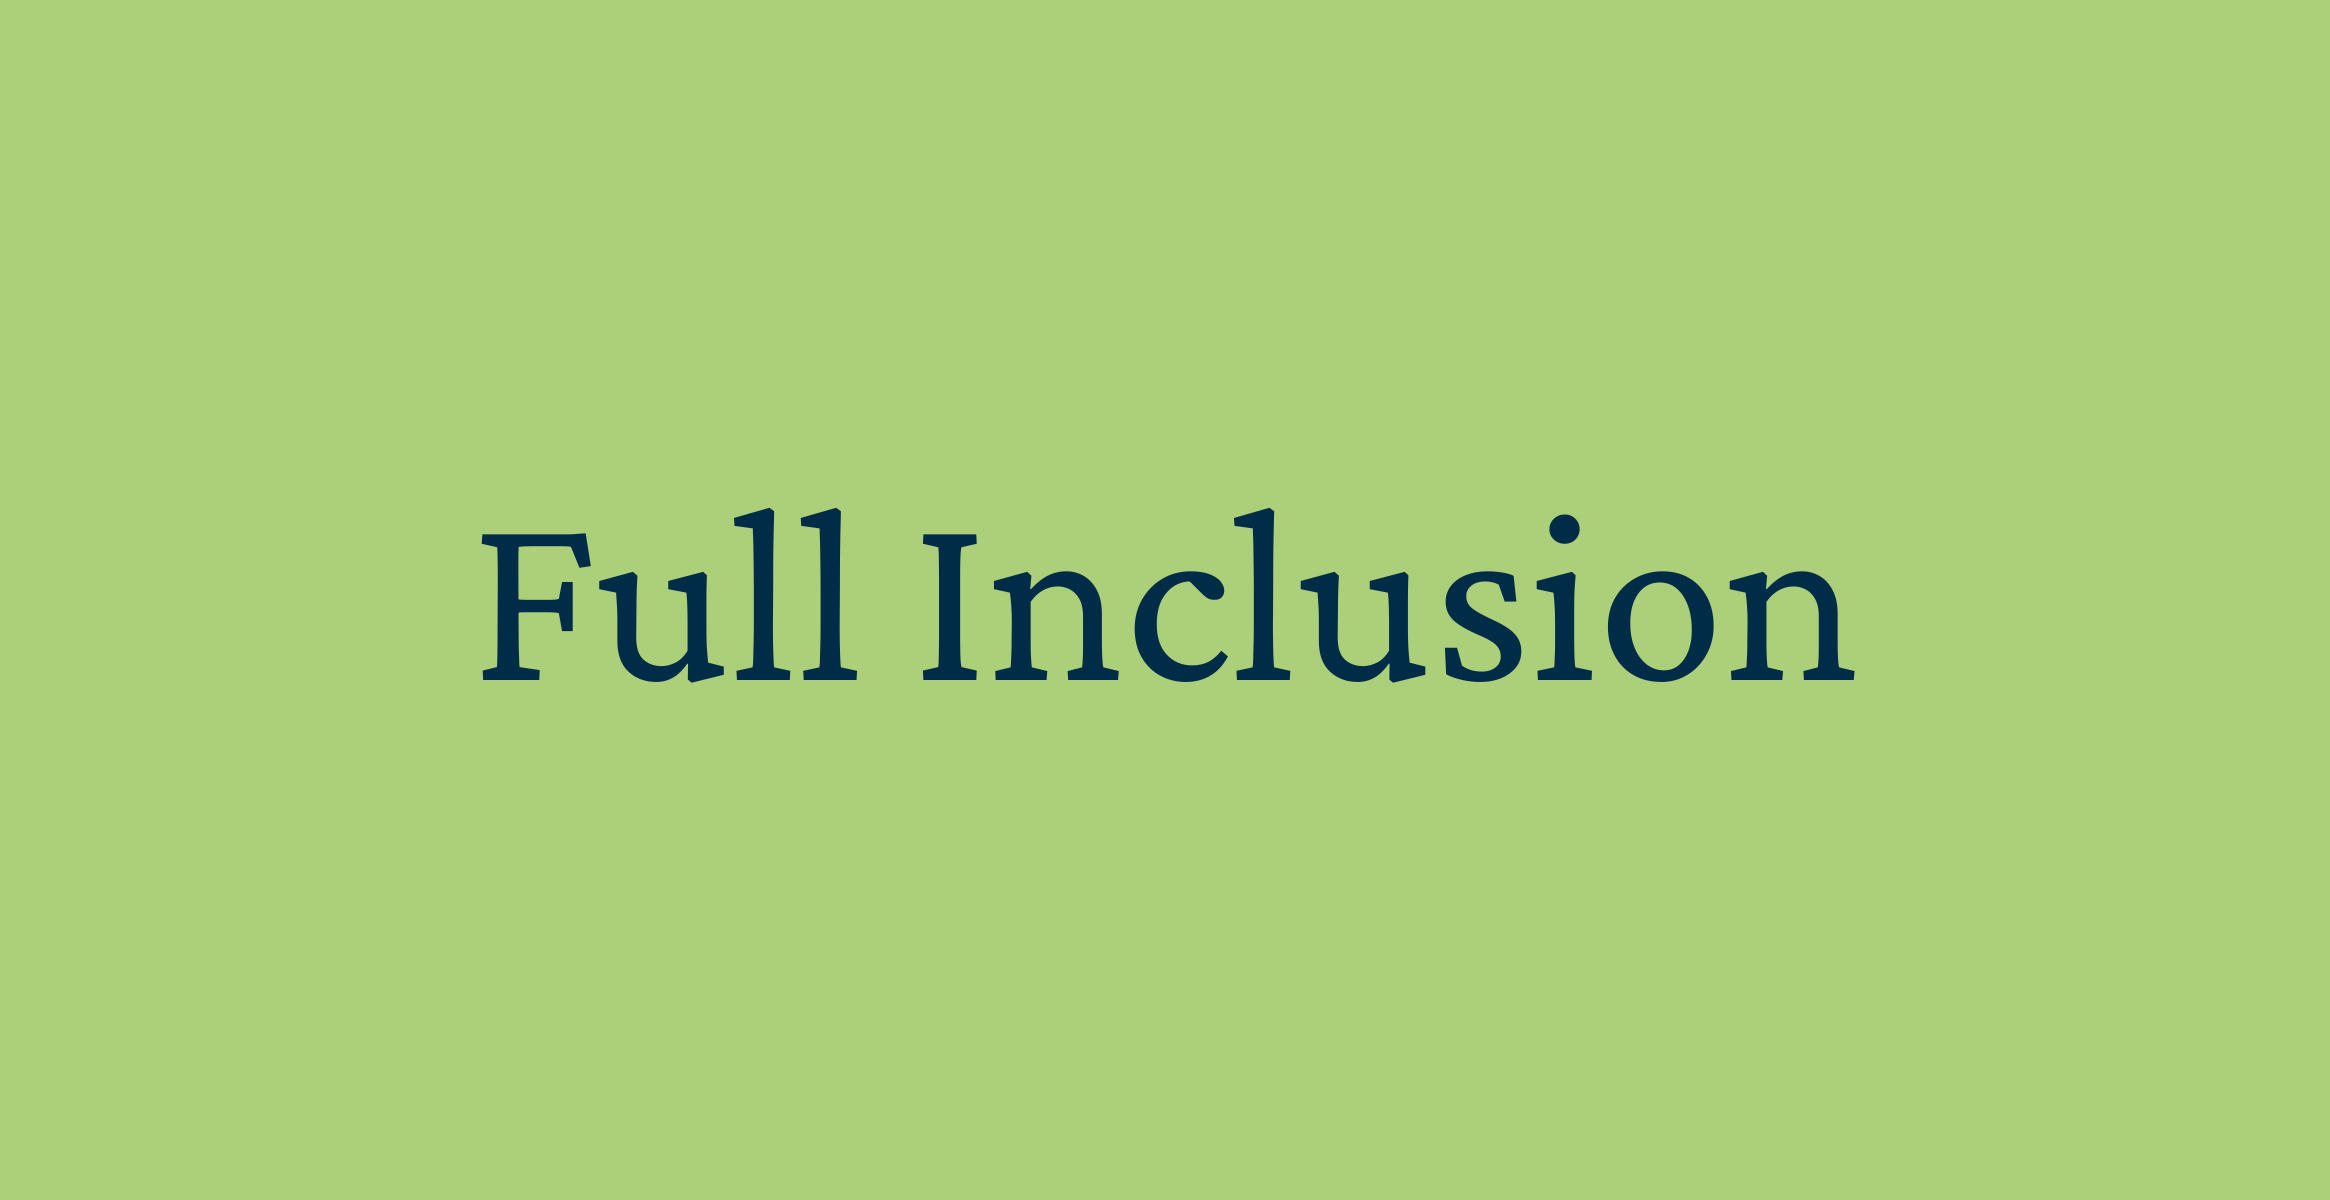 Full inclusion